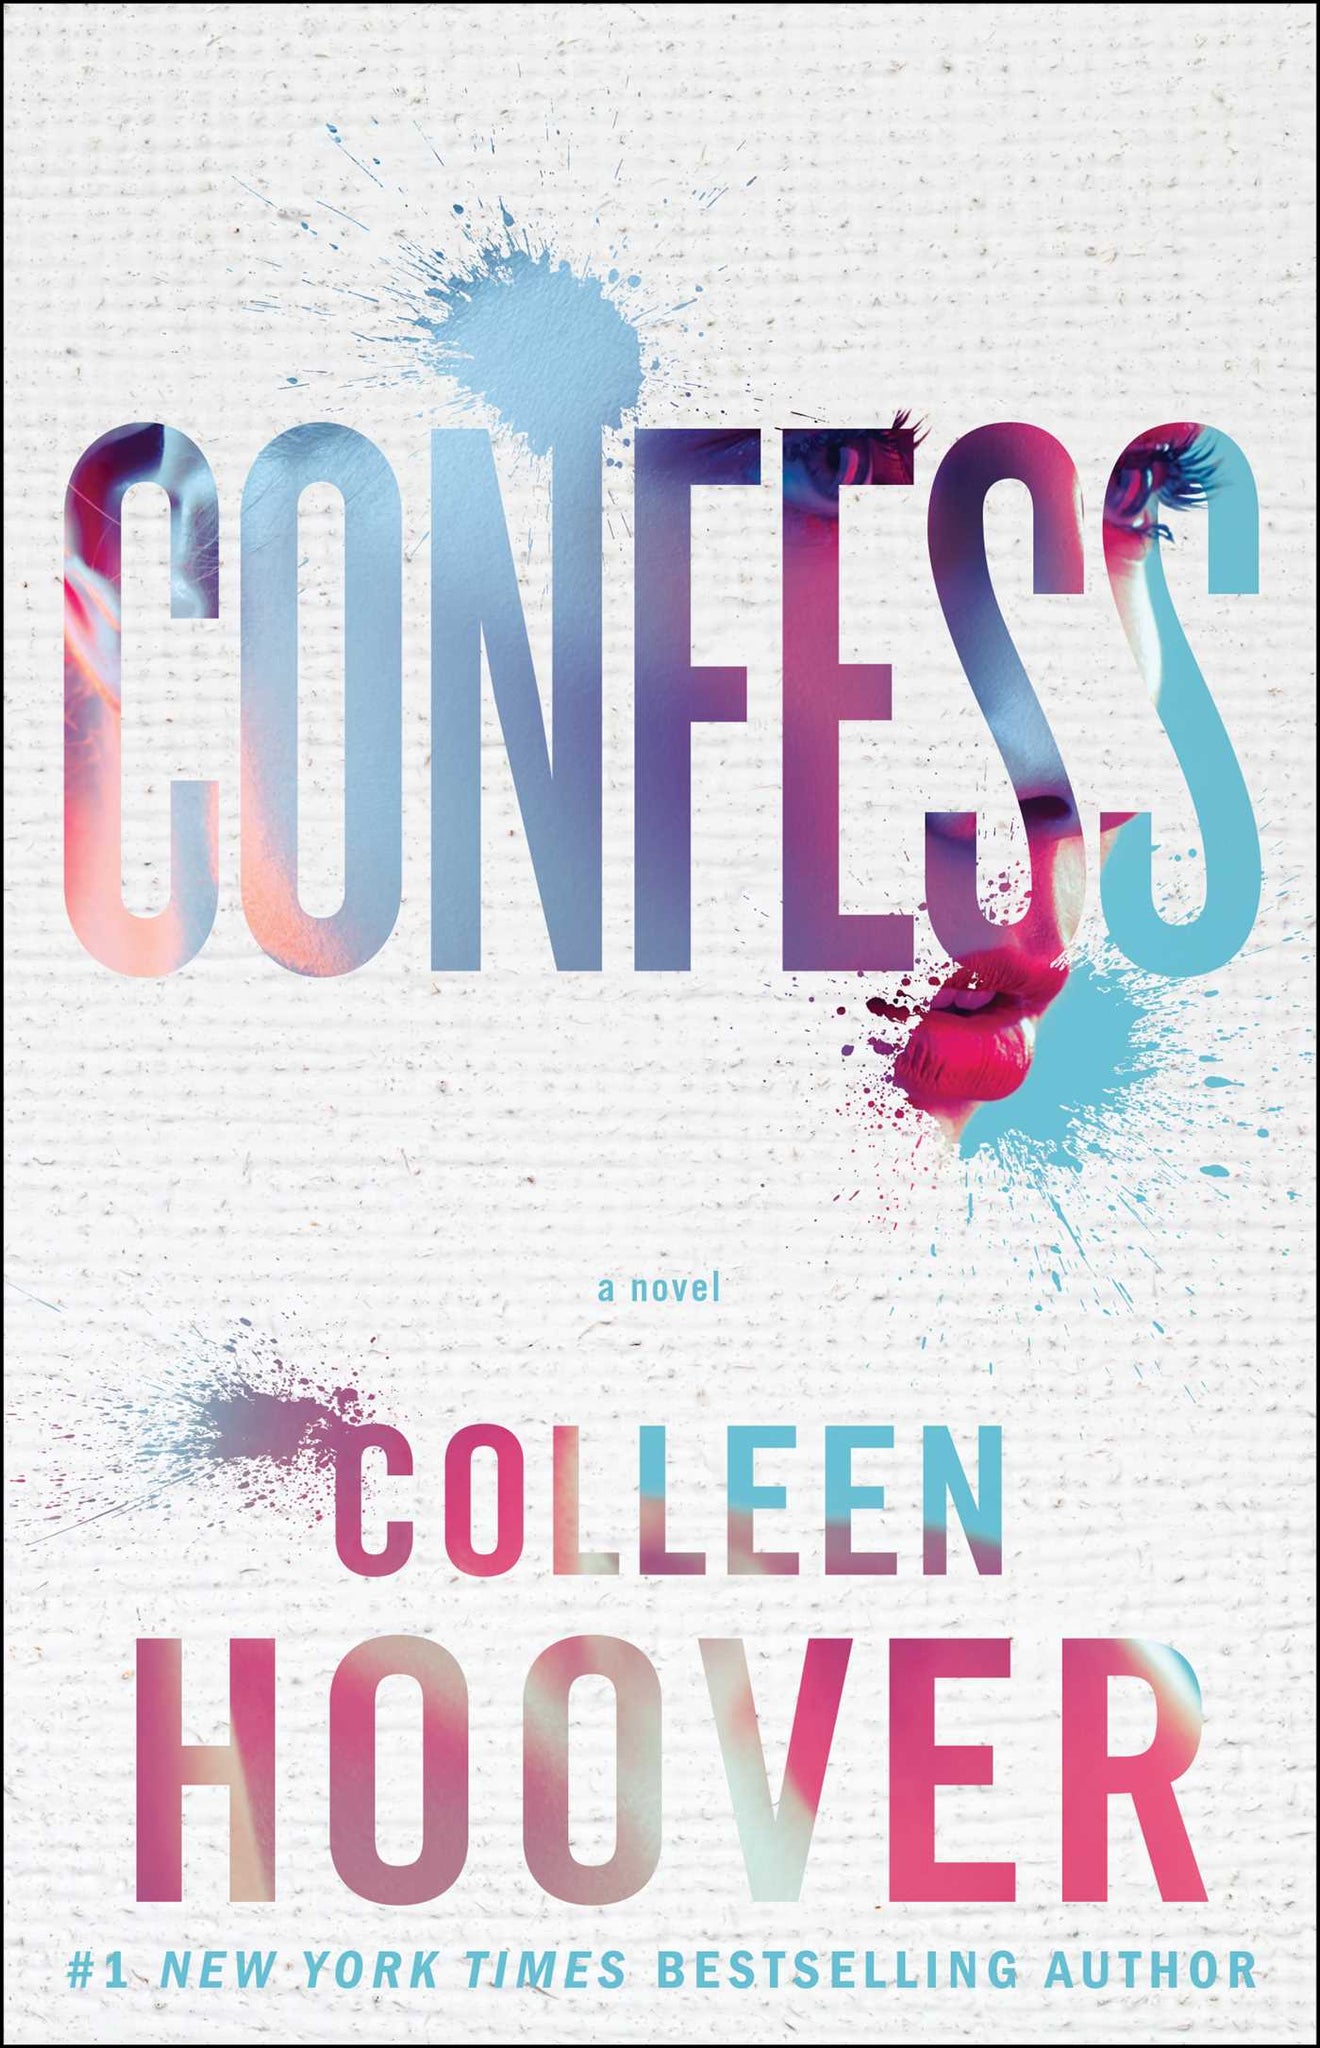 Confess : A Novel